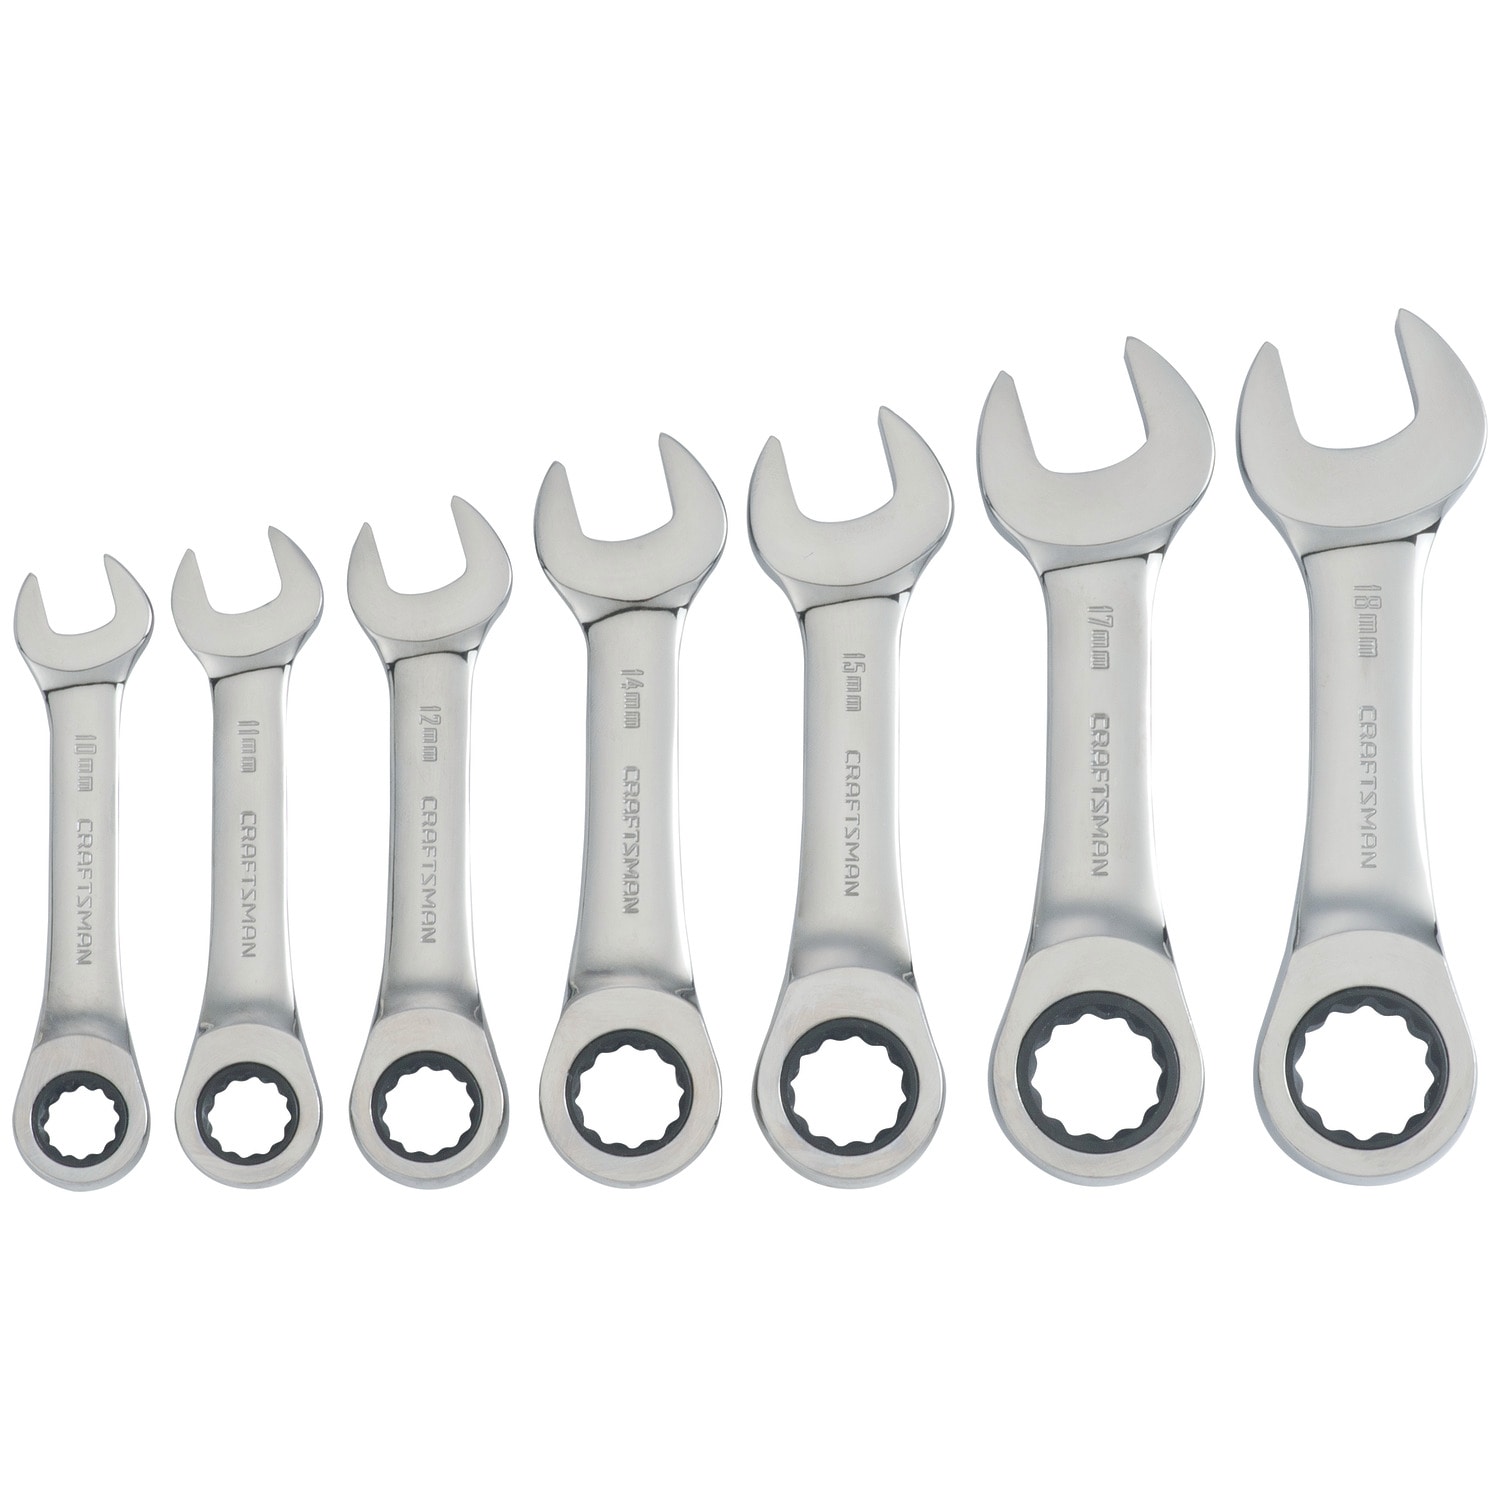 22 pc Craftsman Professional Full Polish Stubby Combination Wrench Set SAE/MM 